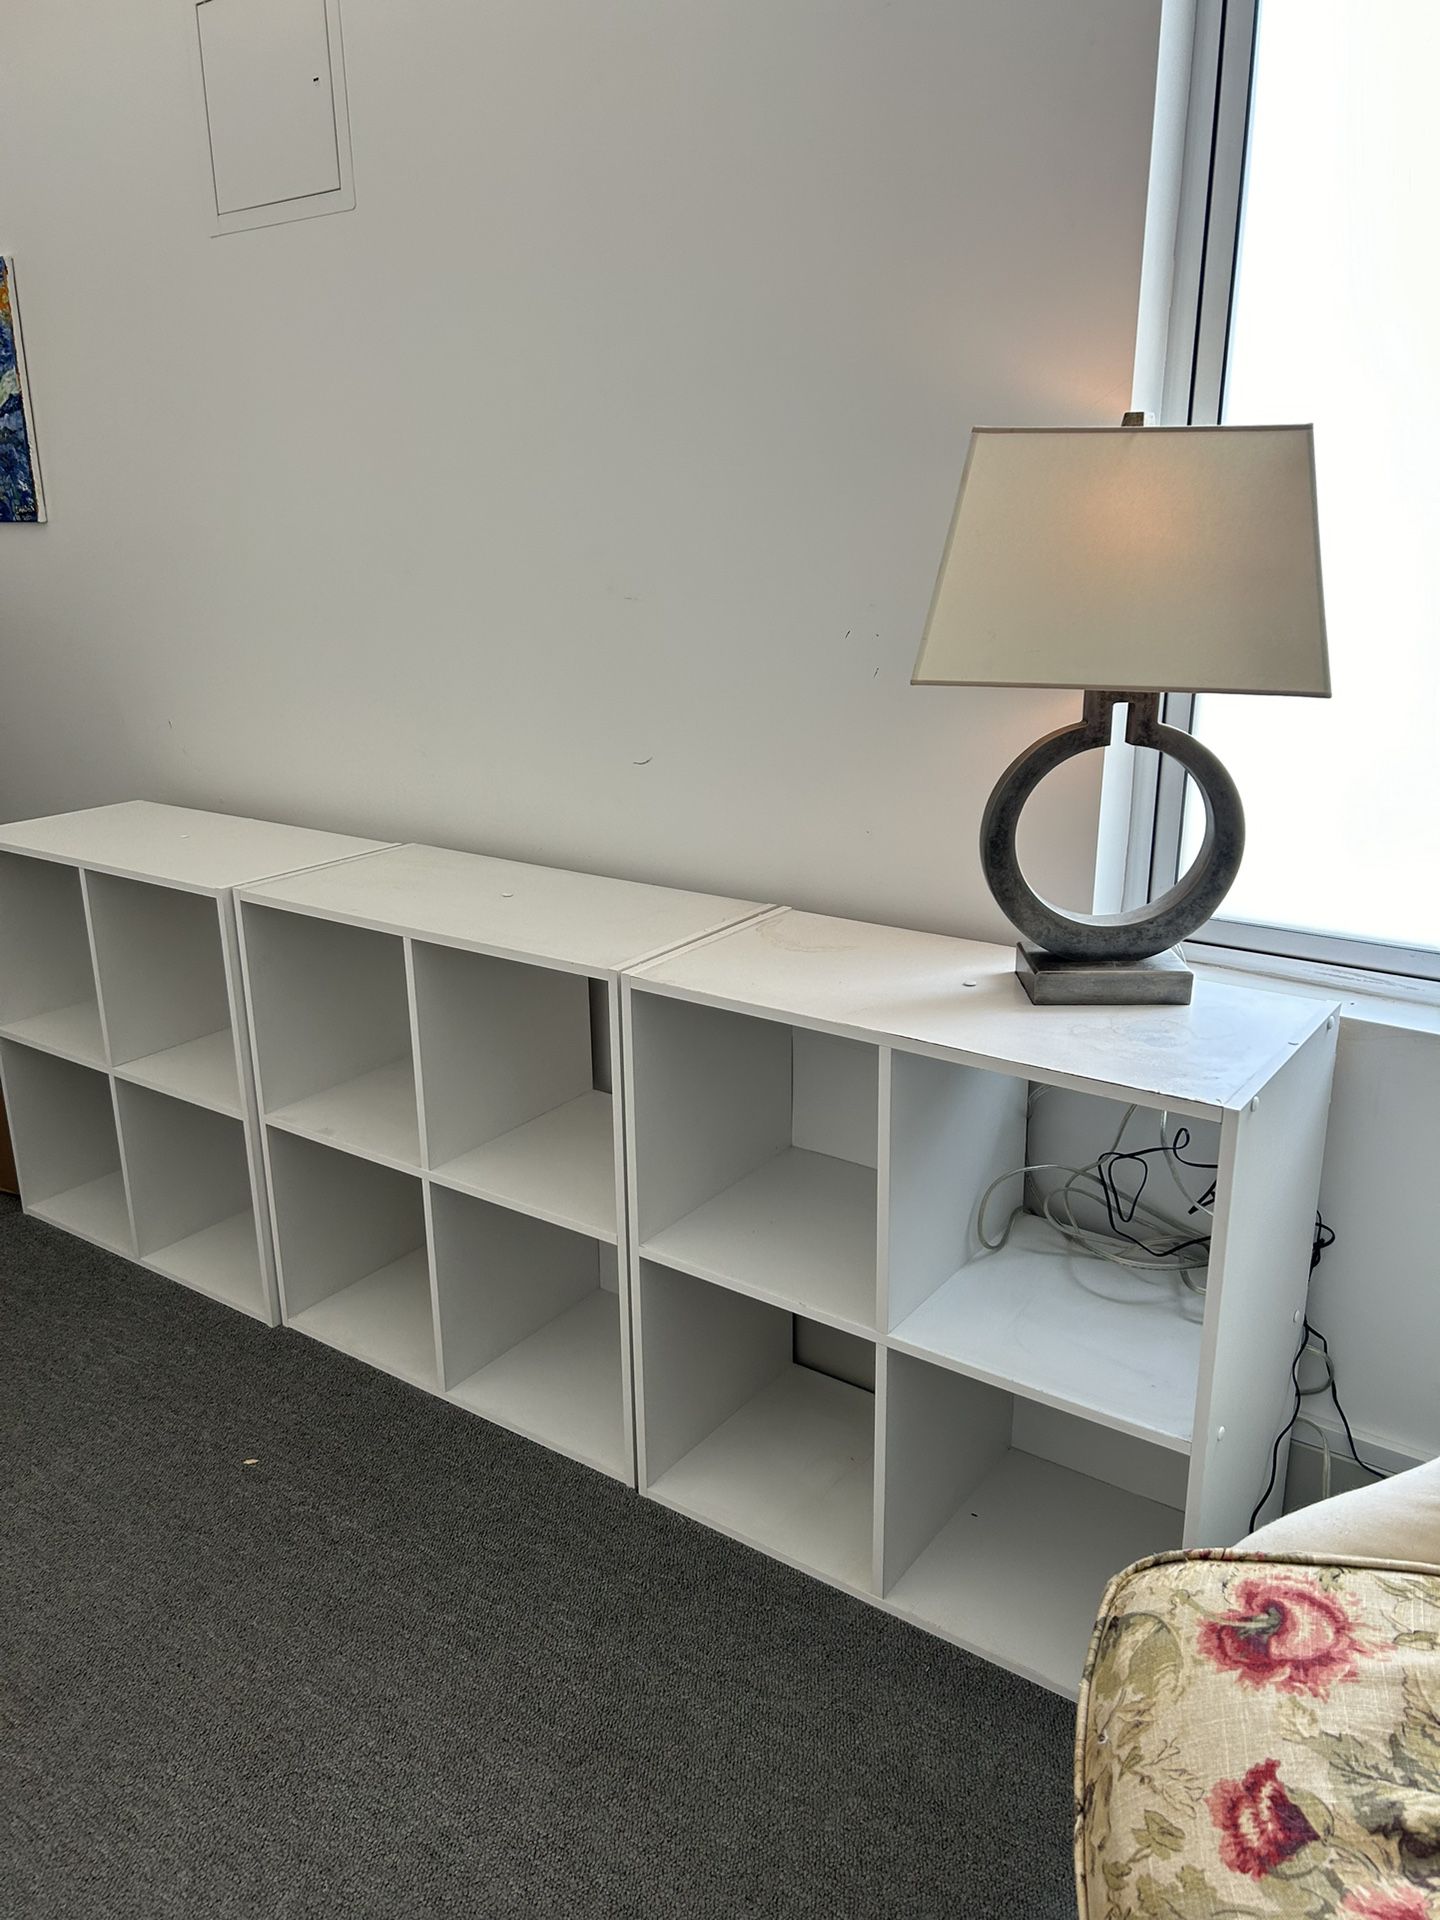 4 - 2x2 Cubby Bookshelves / Storage shelves